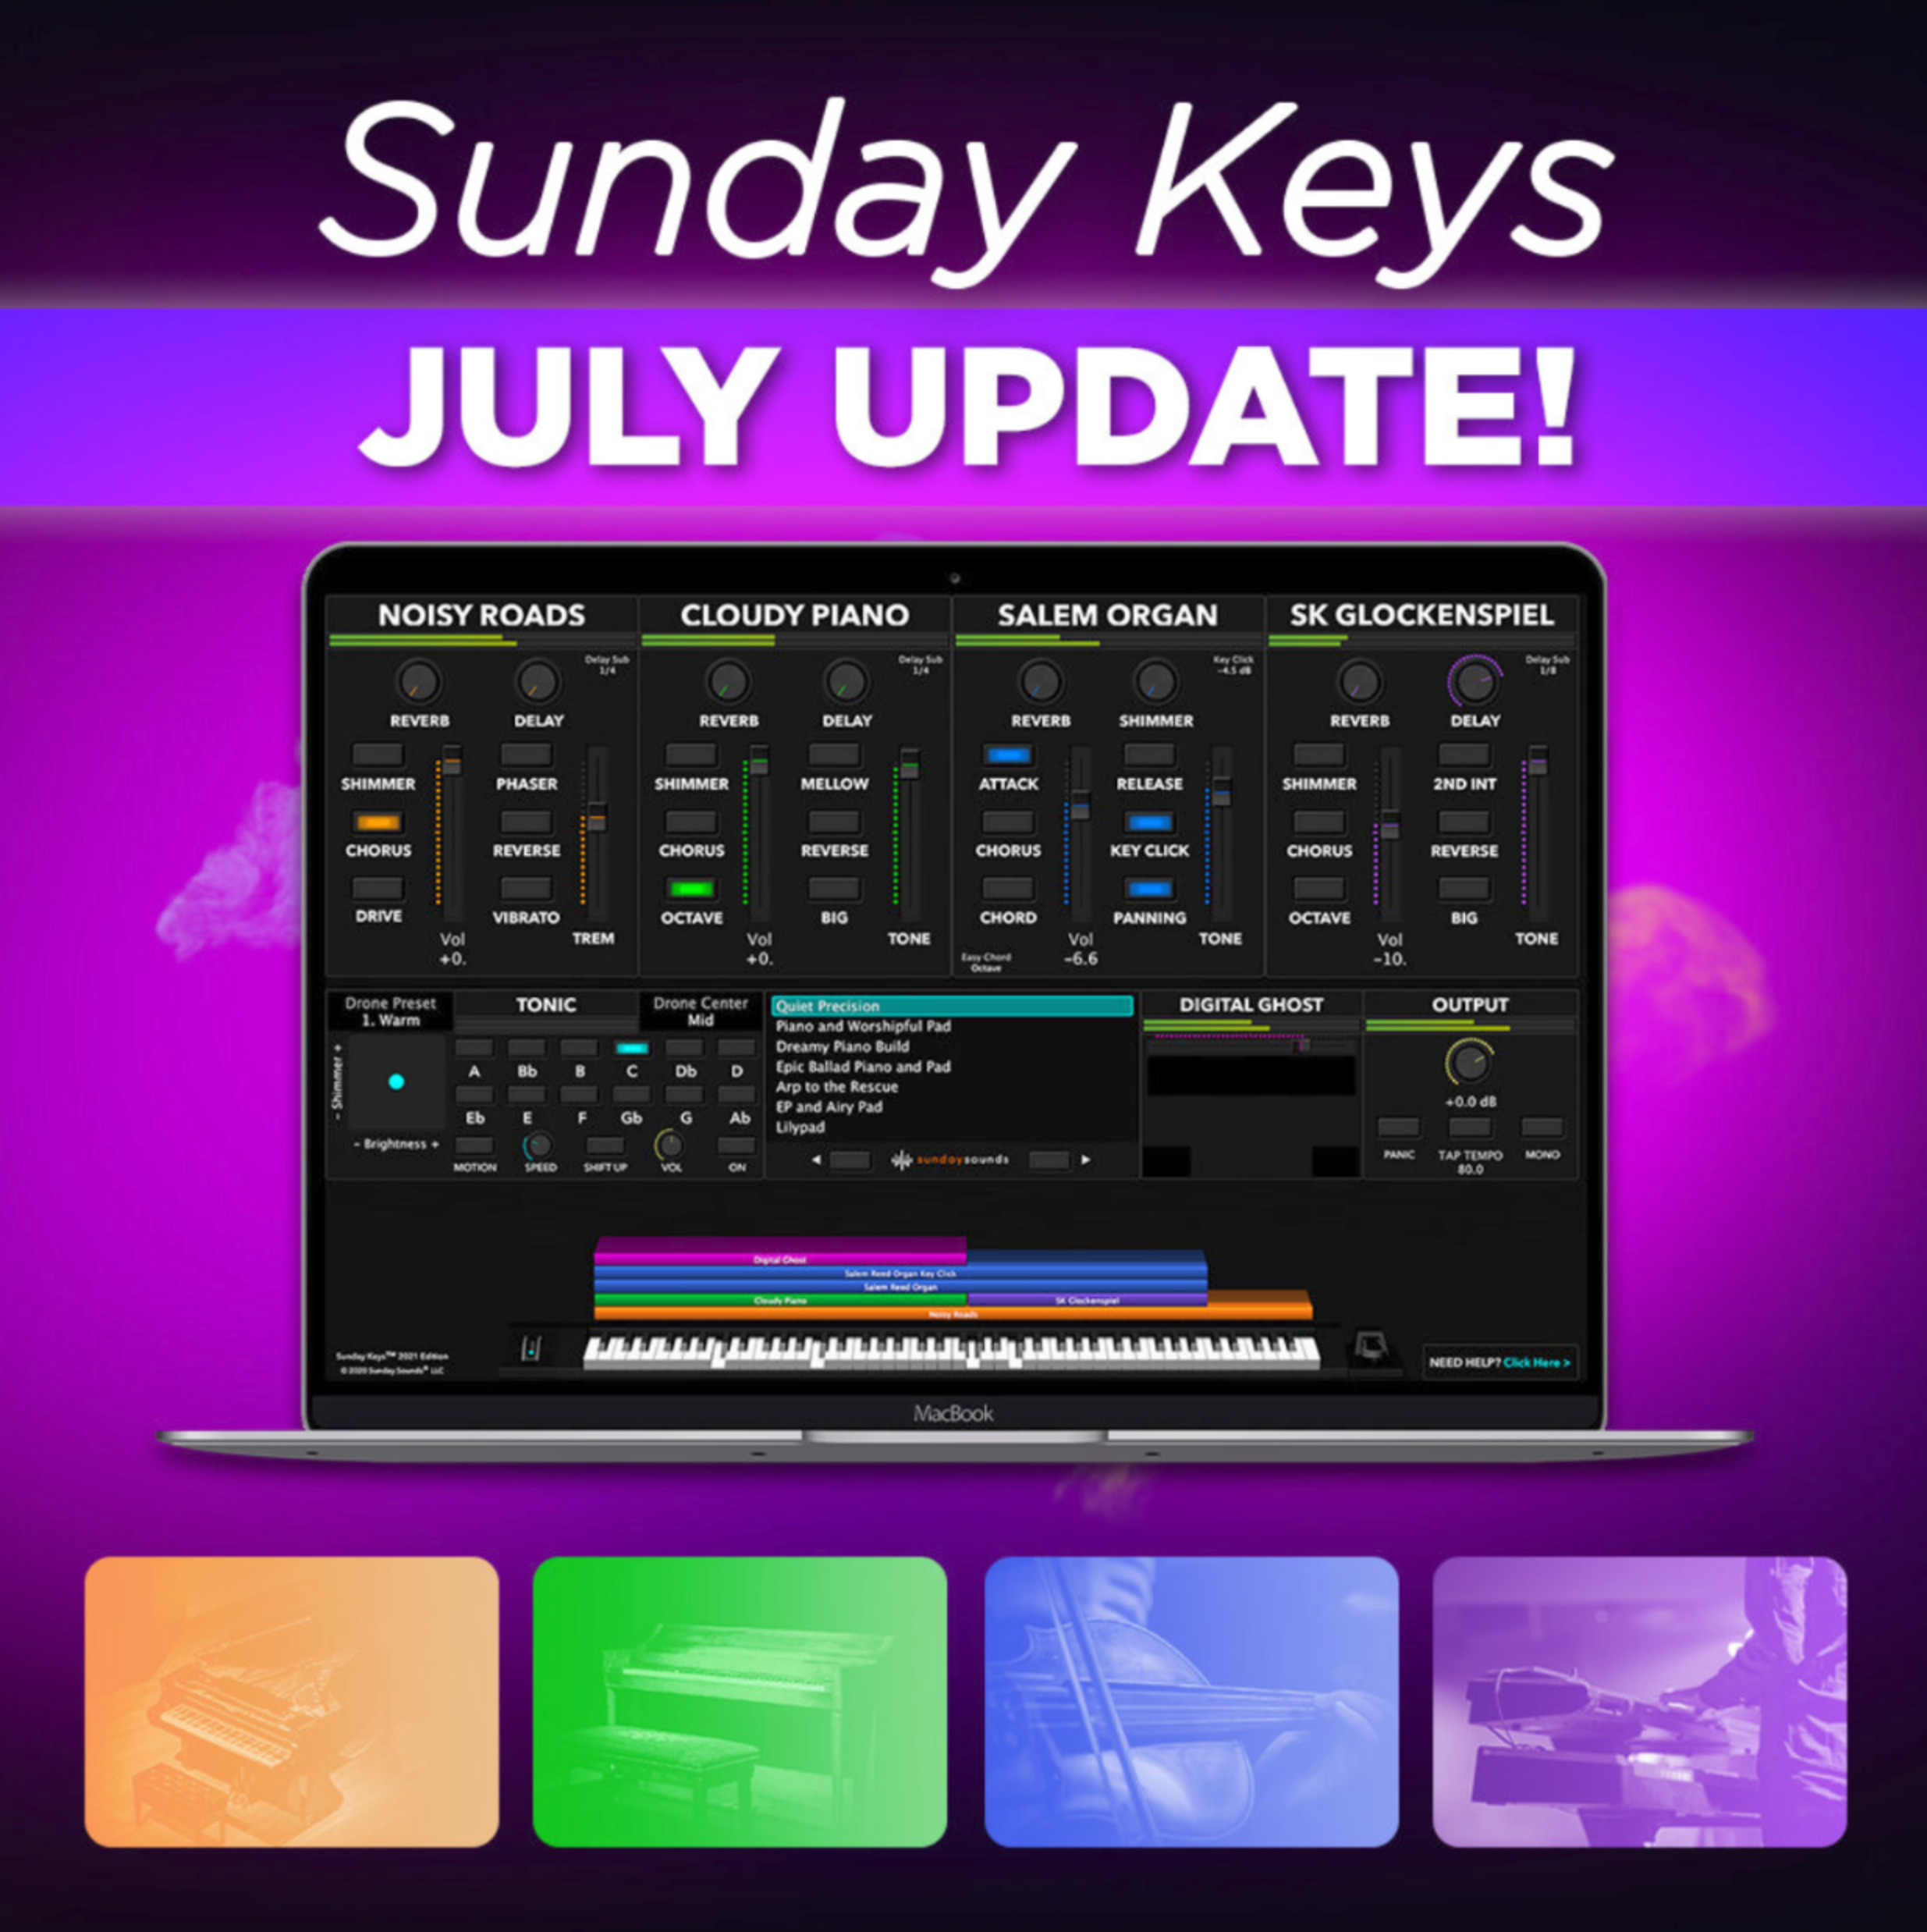 Sunday Keys July Update is Here!